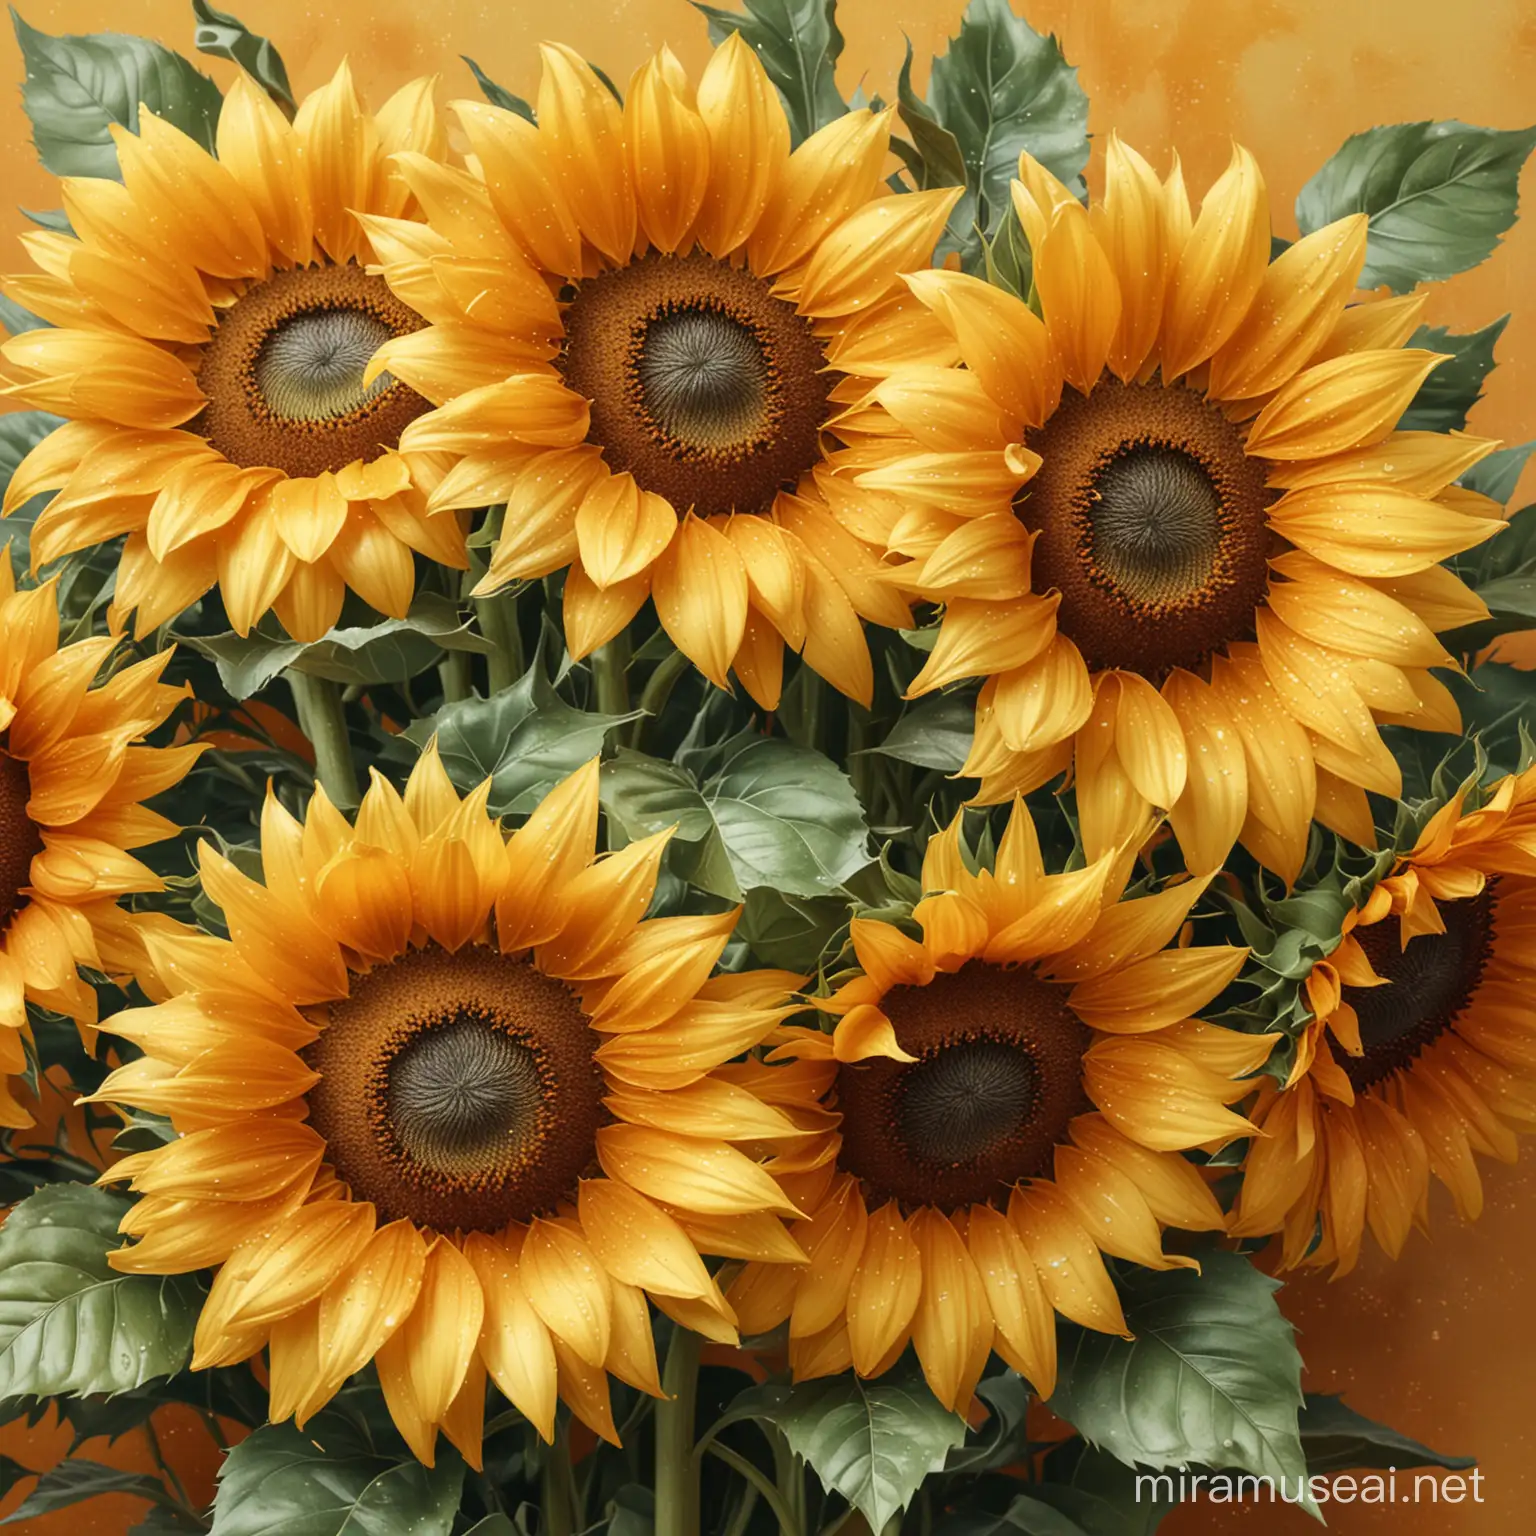 Sunflower Impressionism CloseUp in Vibrant Vector Art